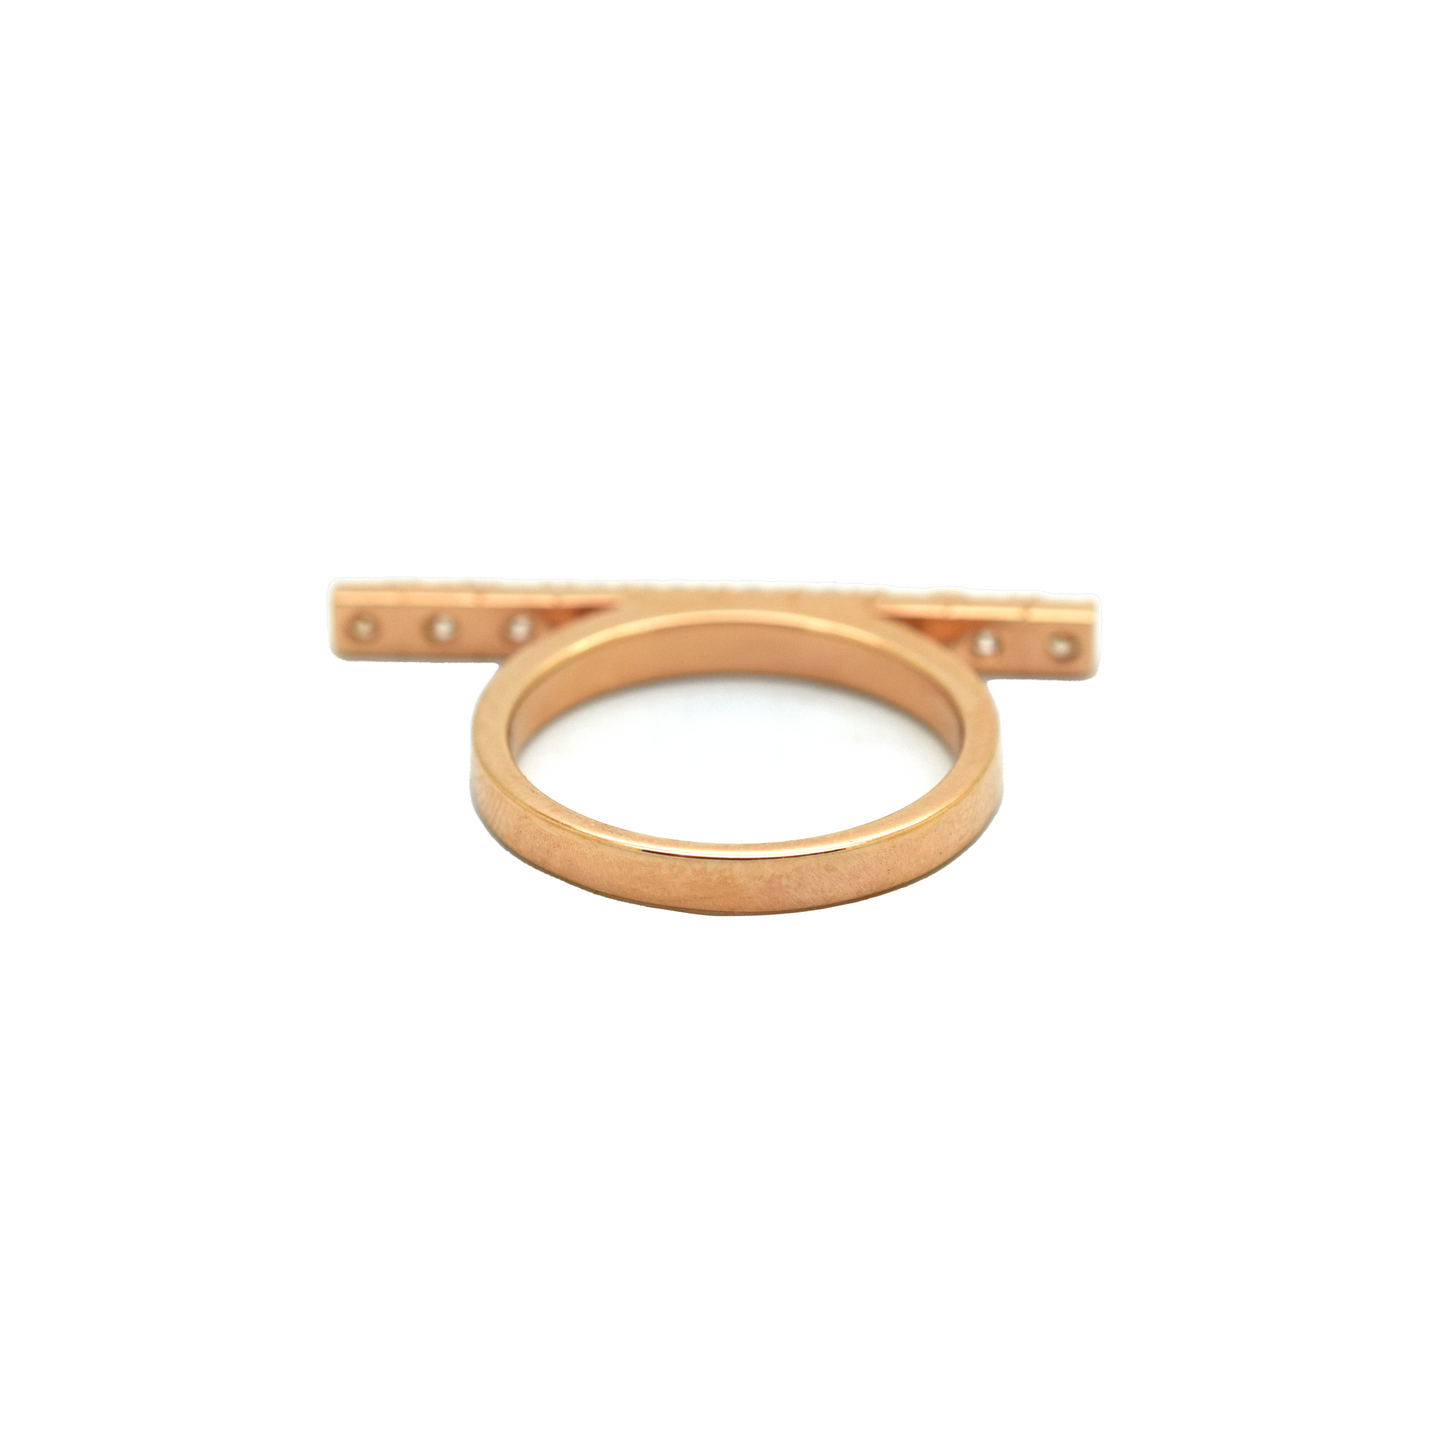 18k Solid Rose Gold Diamond Bar Ring 0.90ct